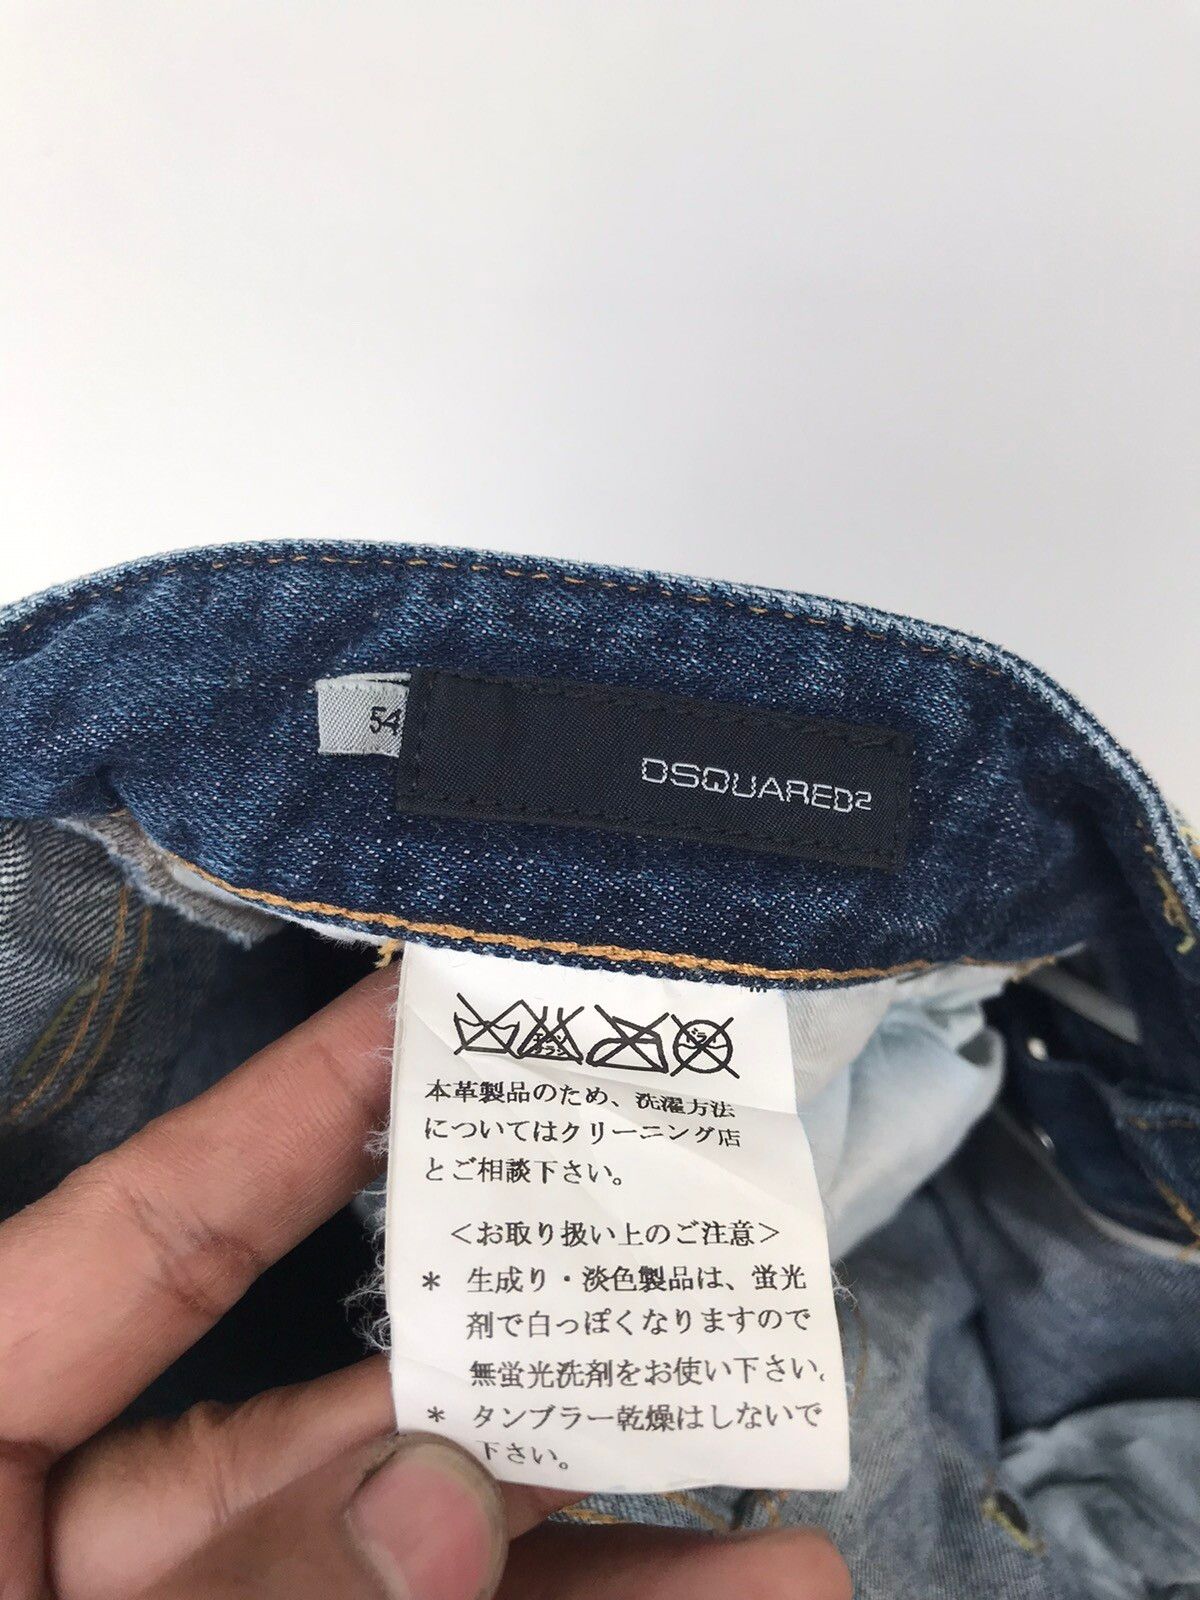 Vintage Dsquared2 Denim Jeans Rare Design - 17